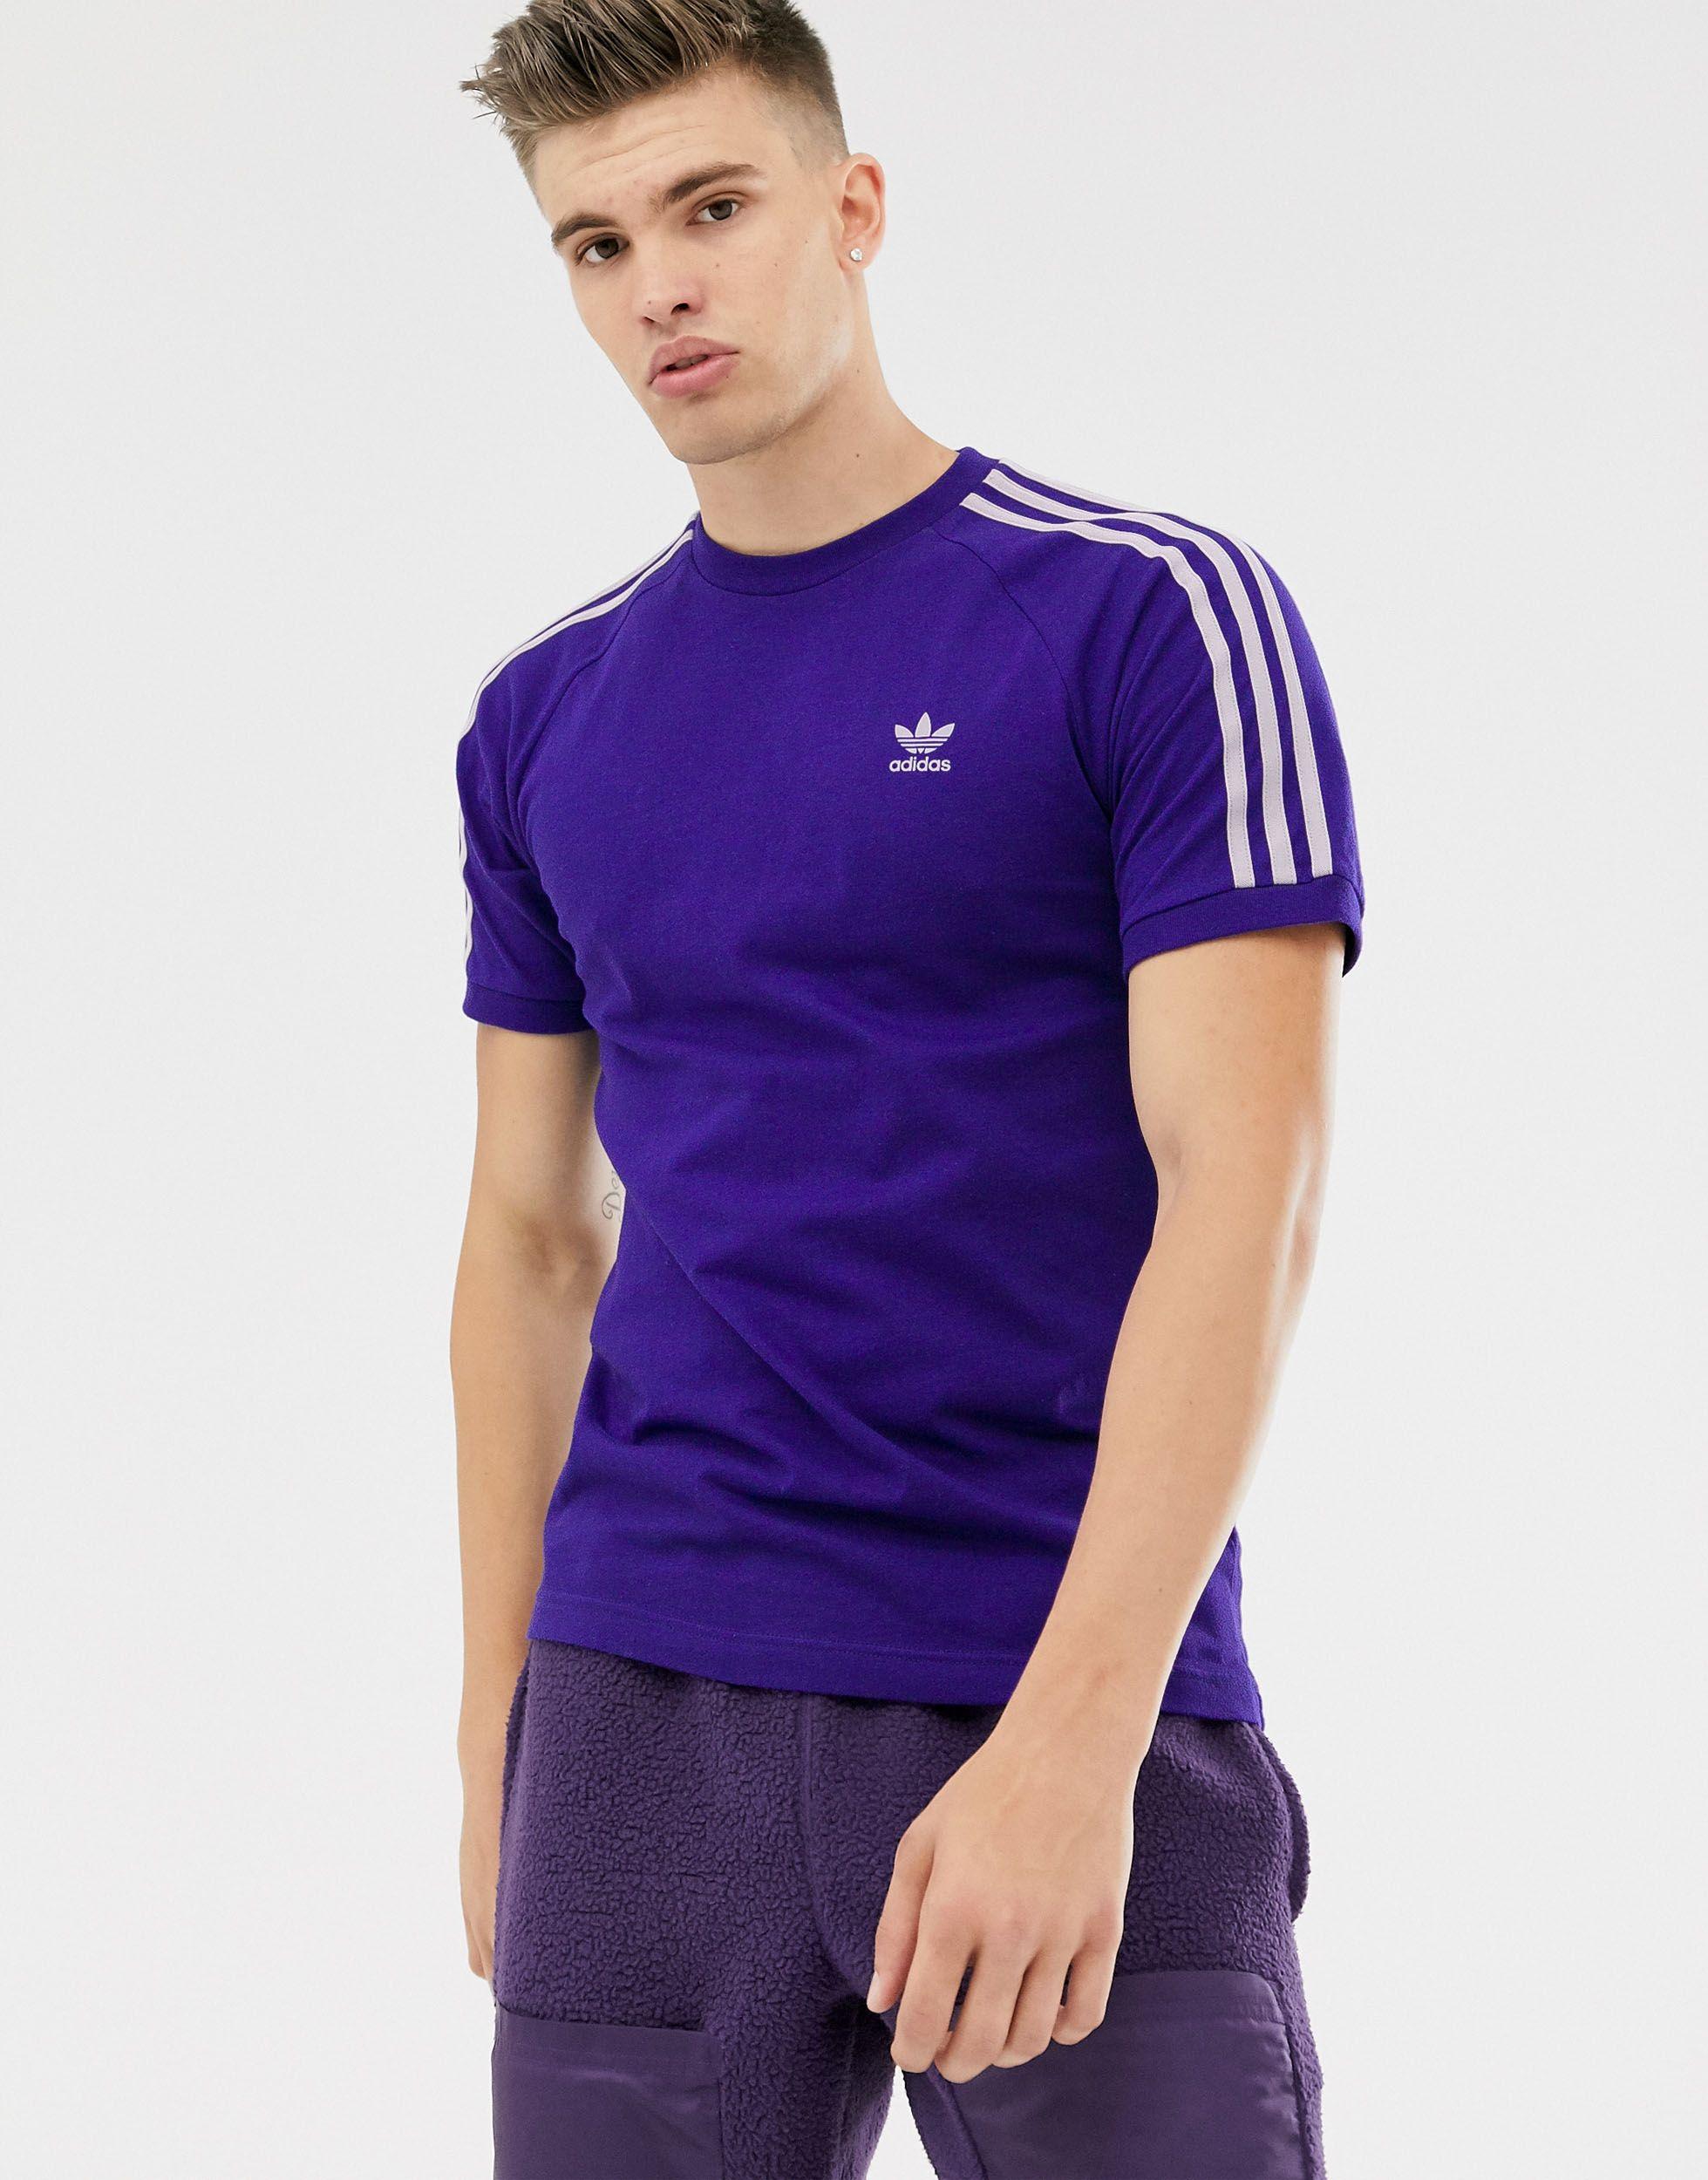 Adidas Men's T-Shirt - Purple - M